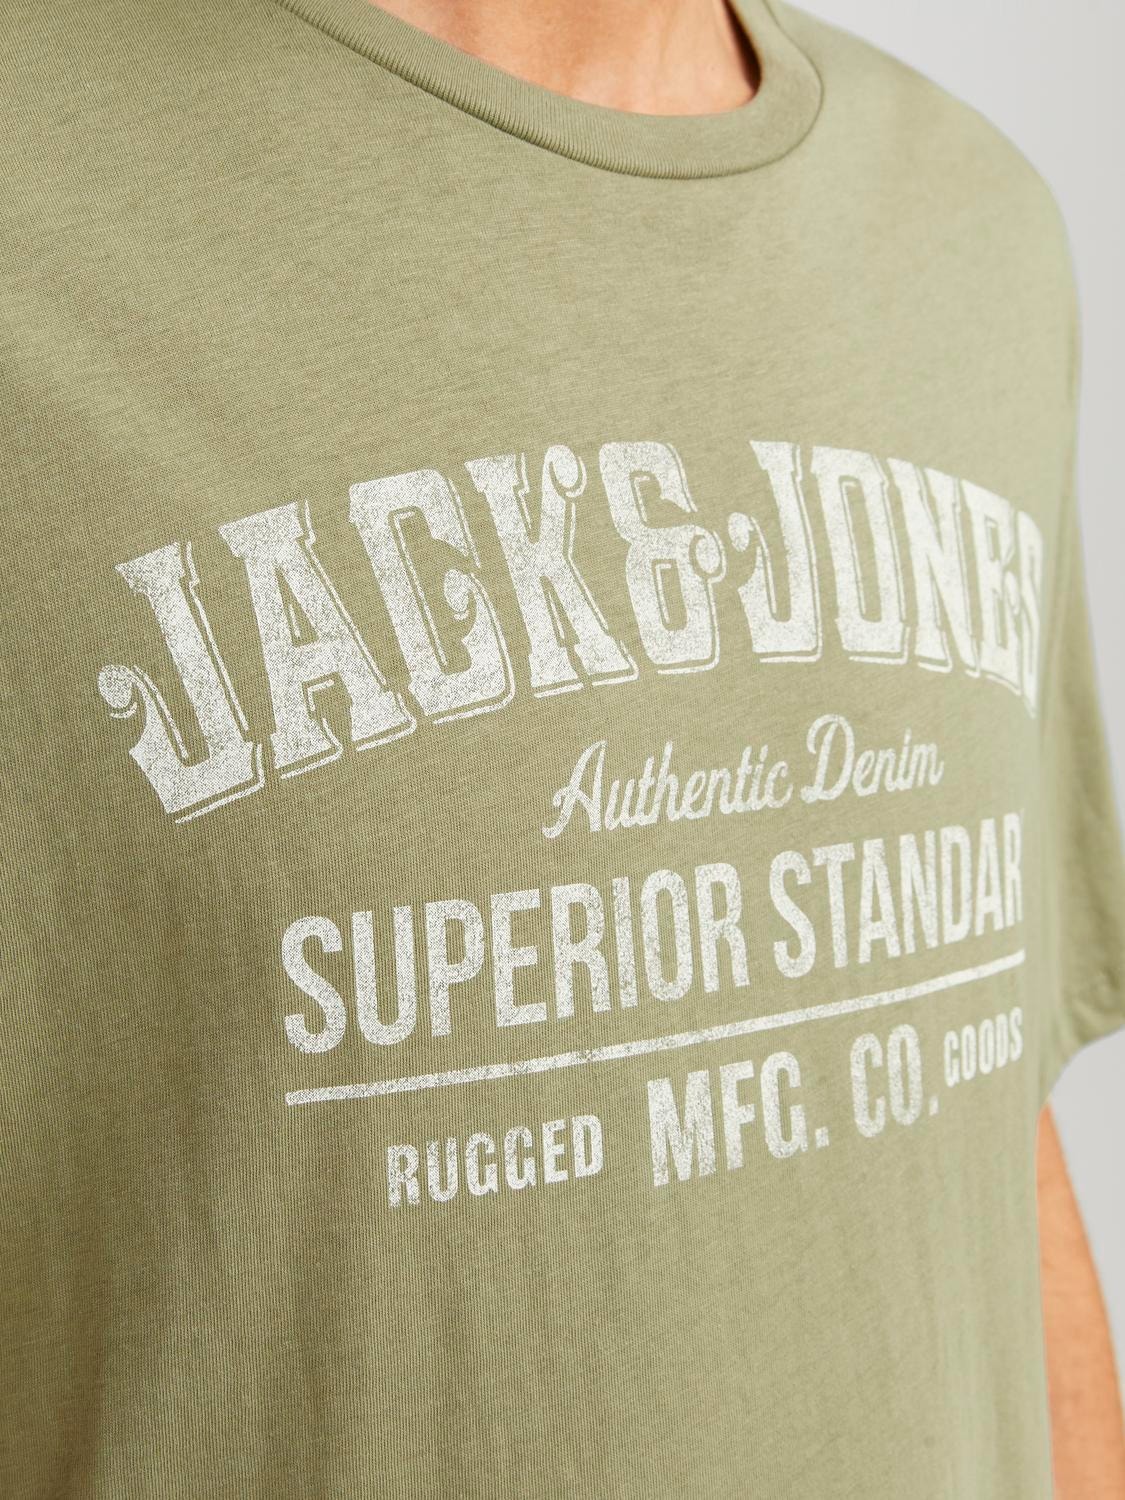 Jack & Jones Logo Ronde hals T-shirt -Oil Green - 12232972